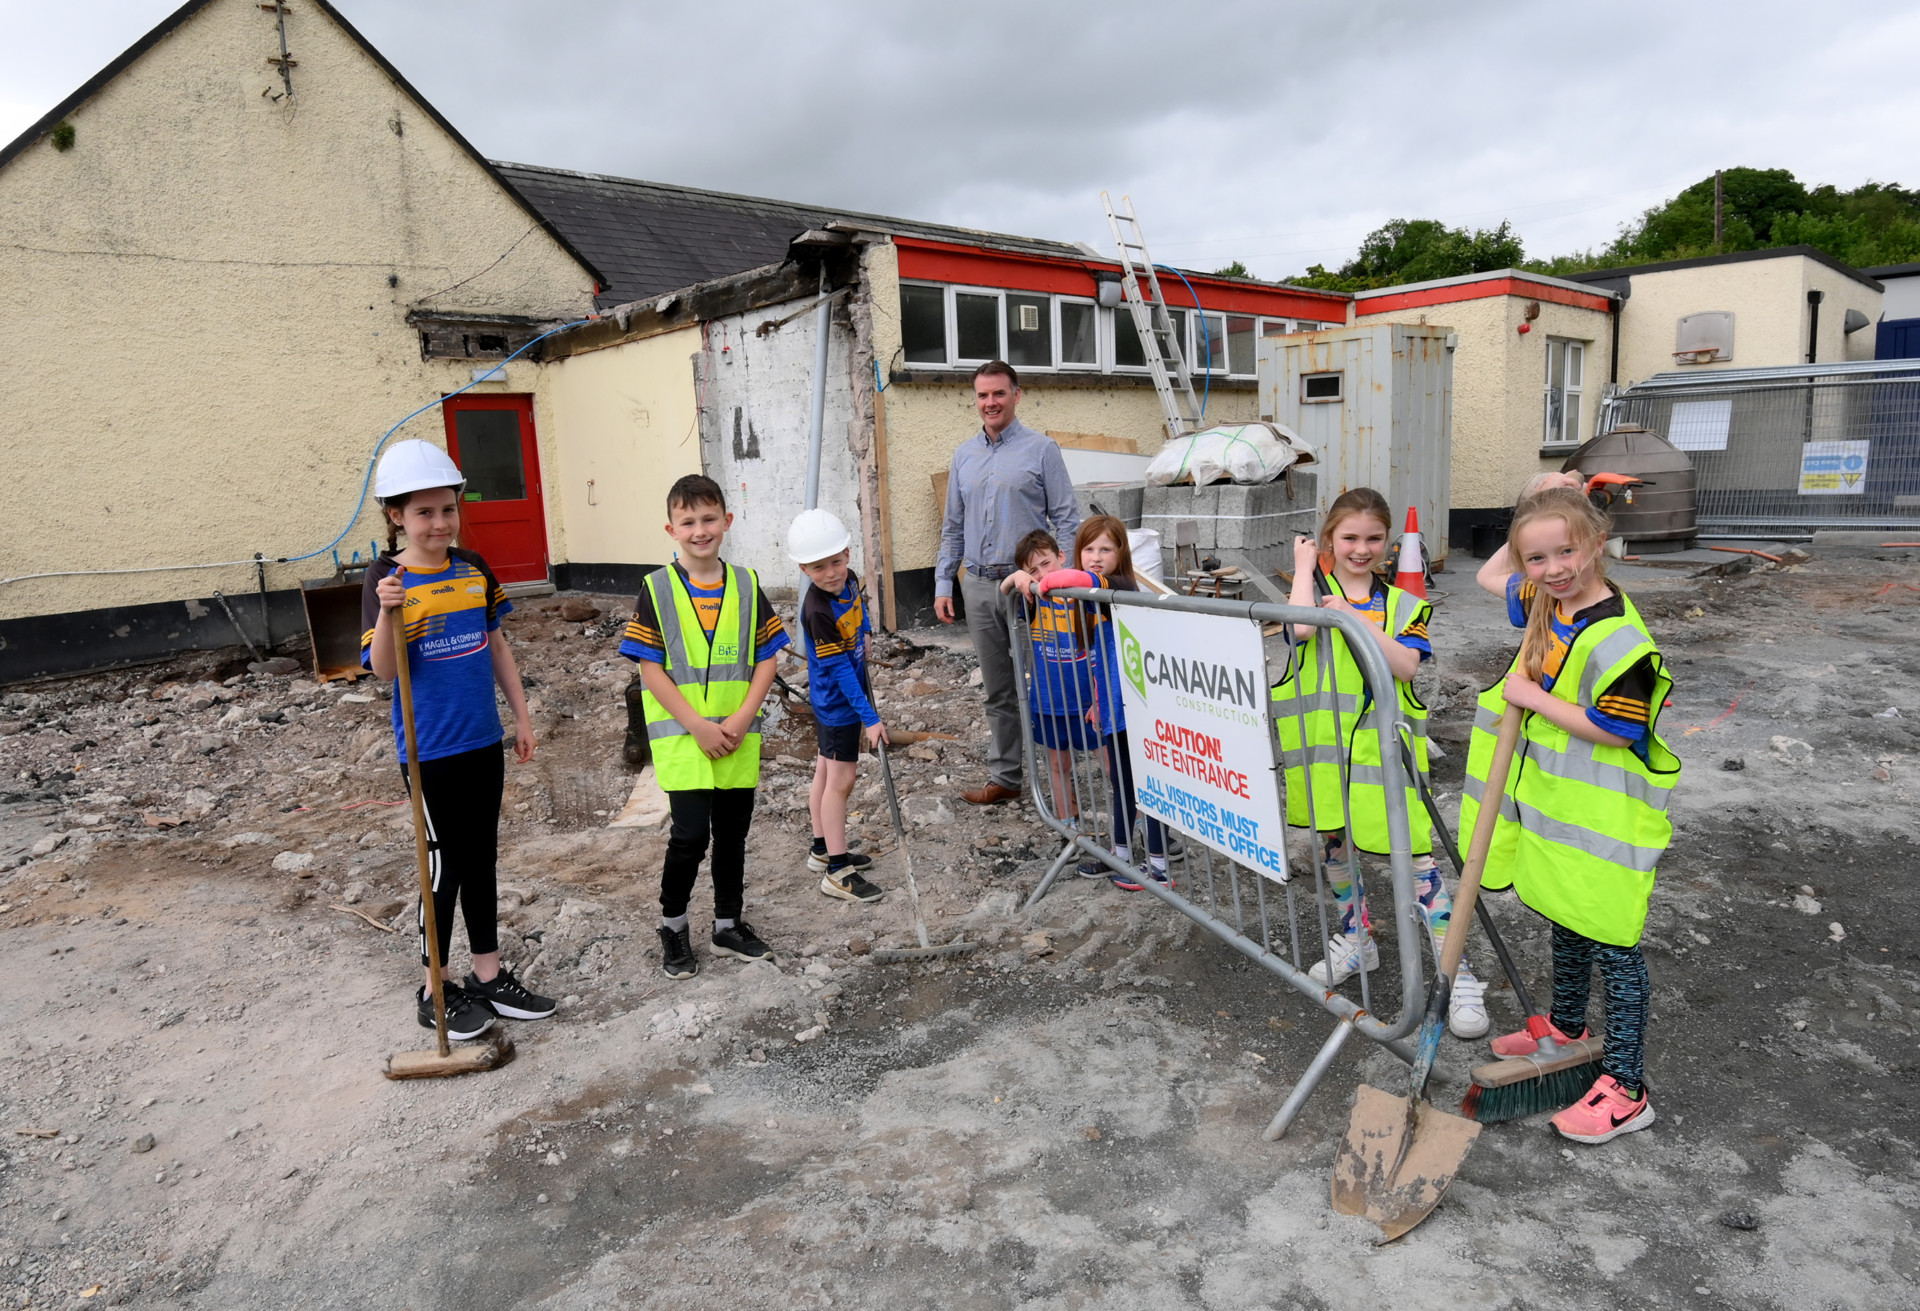 New look for one of Ireland’s oldest school buildings